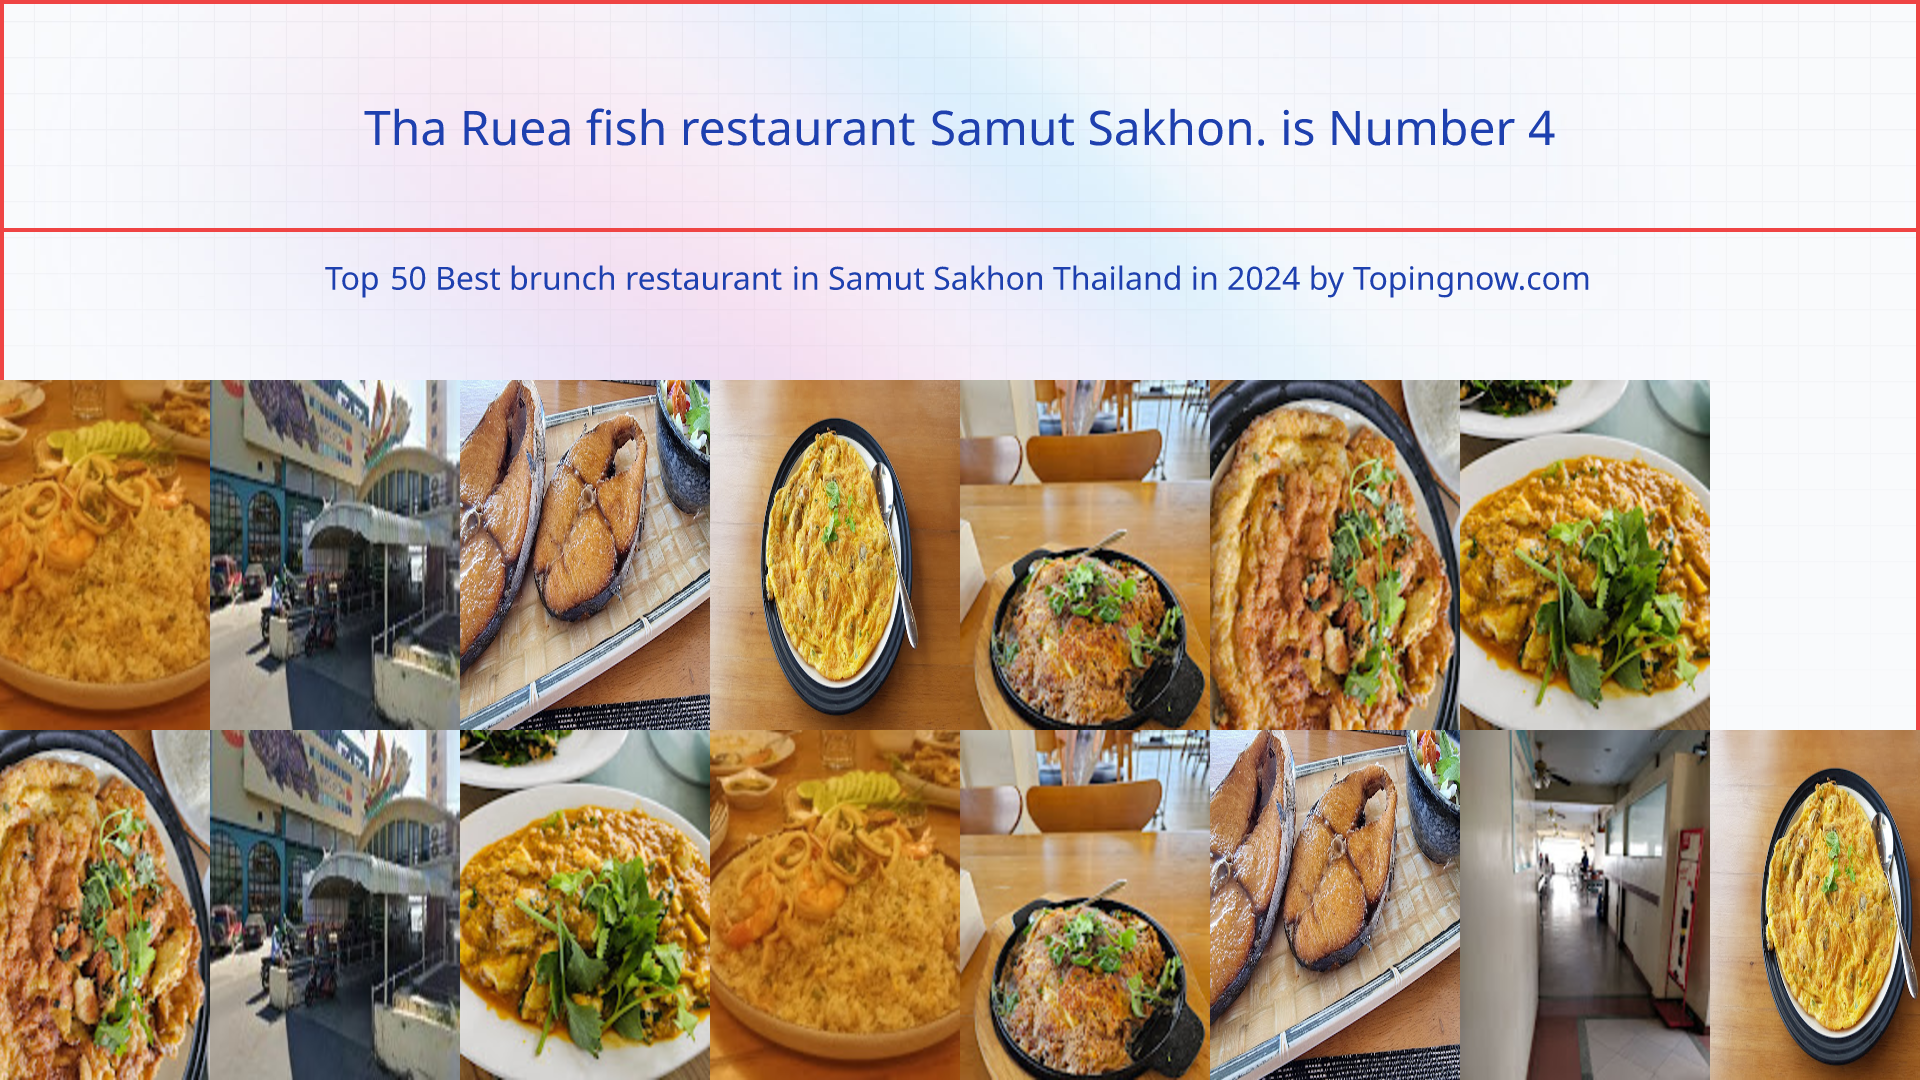 Tha Ruea fish restaurant Samut Sakhon.: Top 50 Best brunch restaurant in Samut Sakhon Thailand in 2024